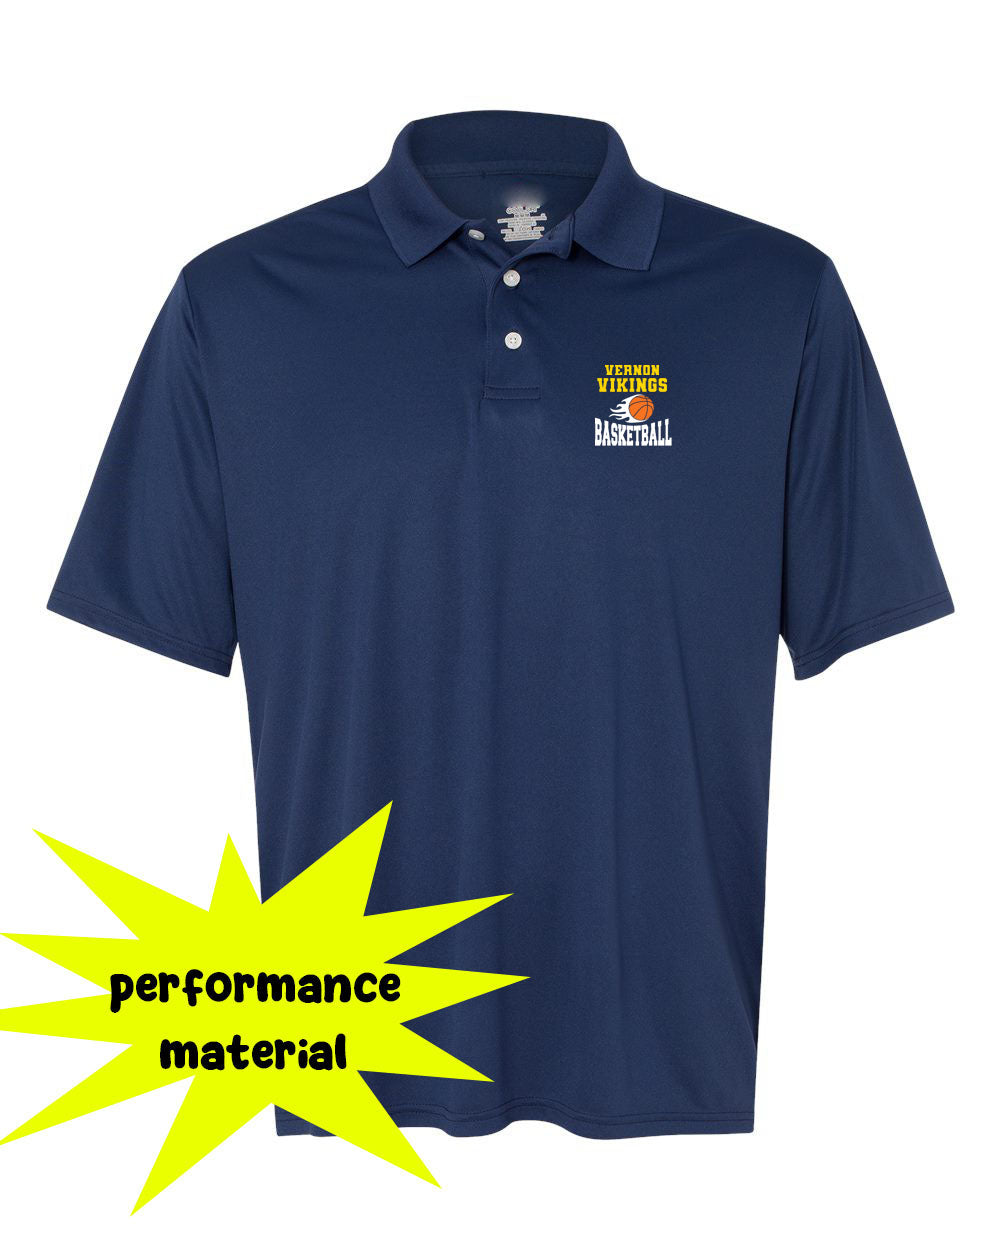 Vikings Basketball Performance Material Polo T-Shirt Design 4